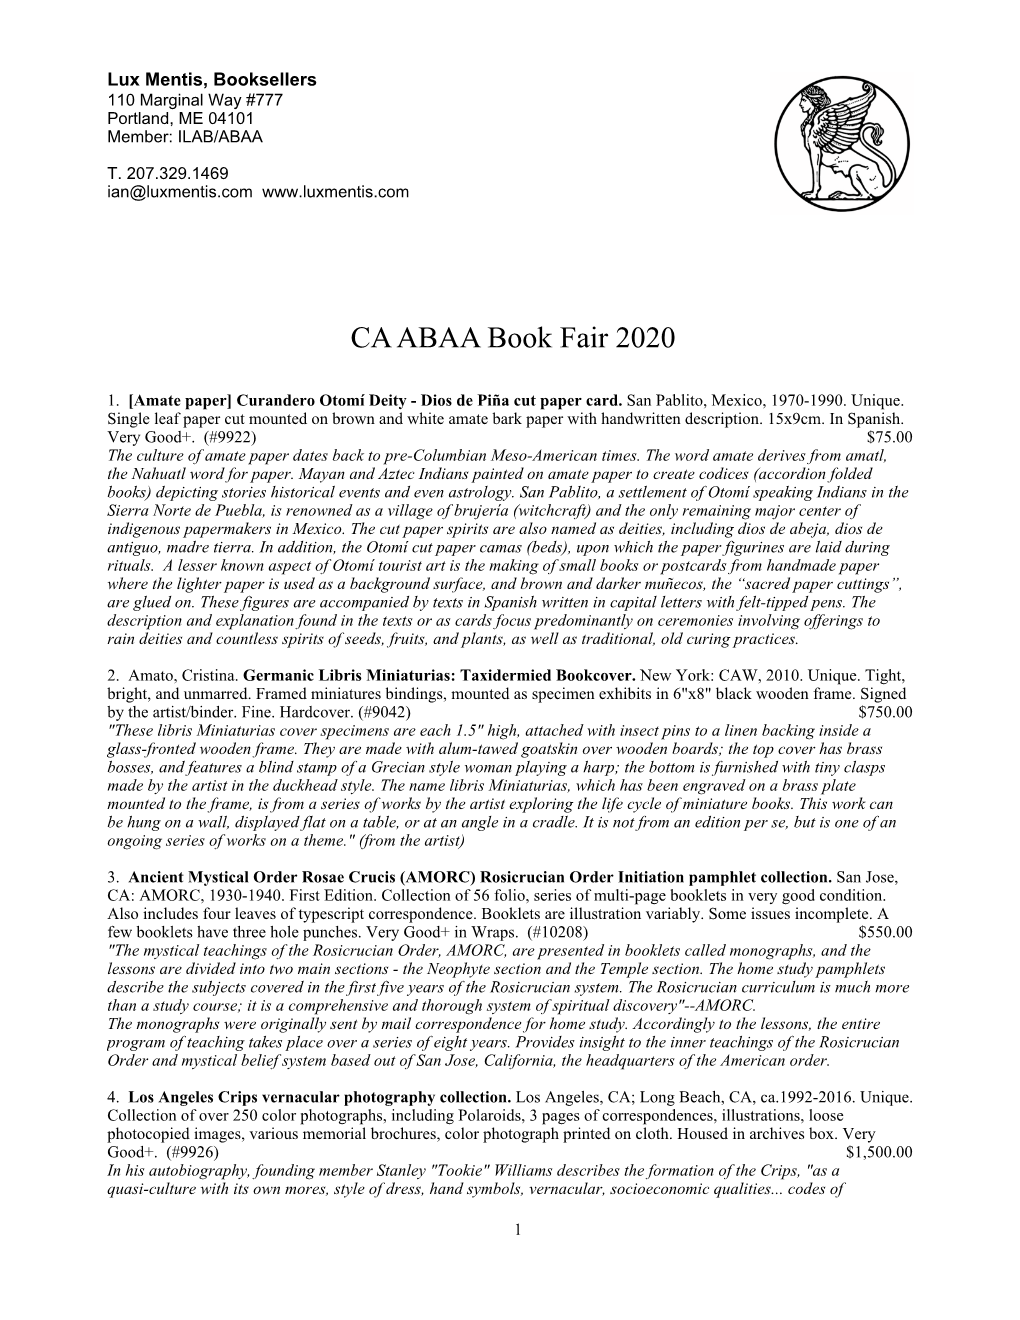 CA ABAA Book Fair 2020